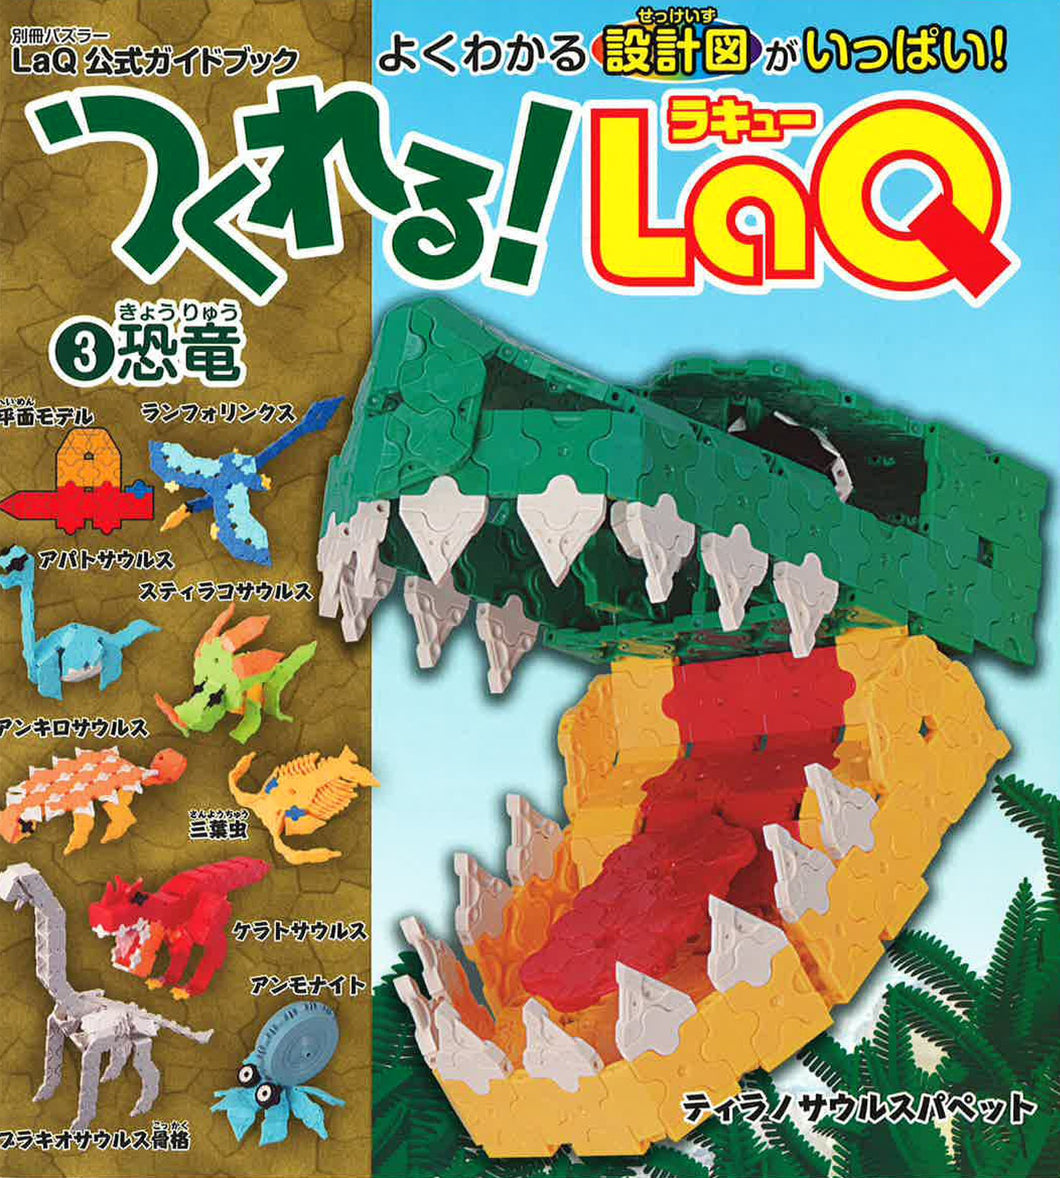 LaQ book instruction part 3 dinosaurs